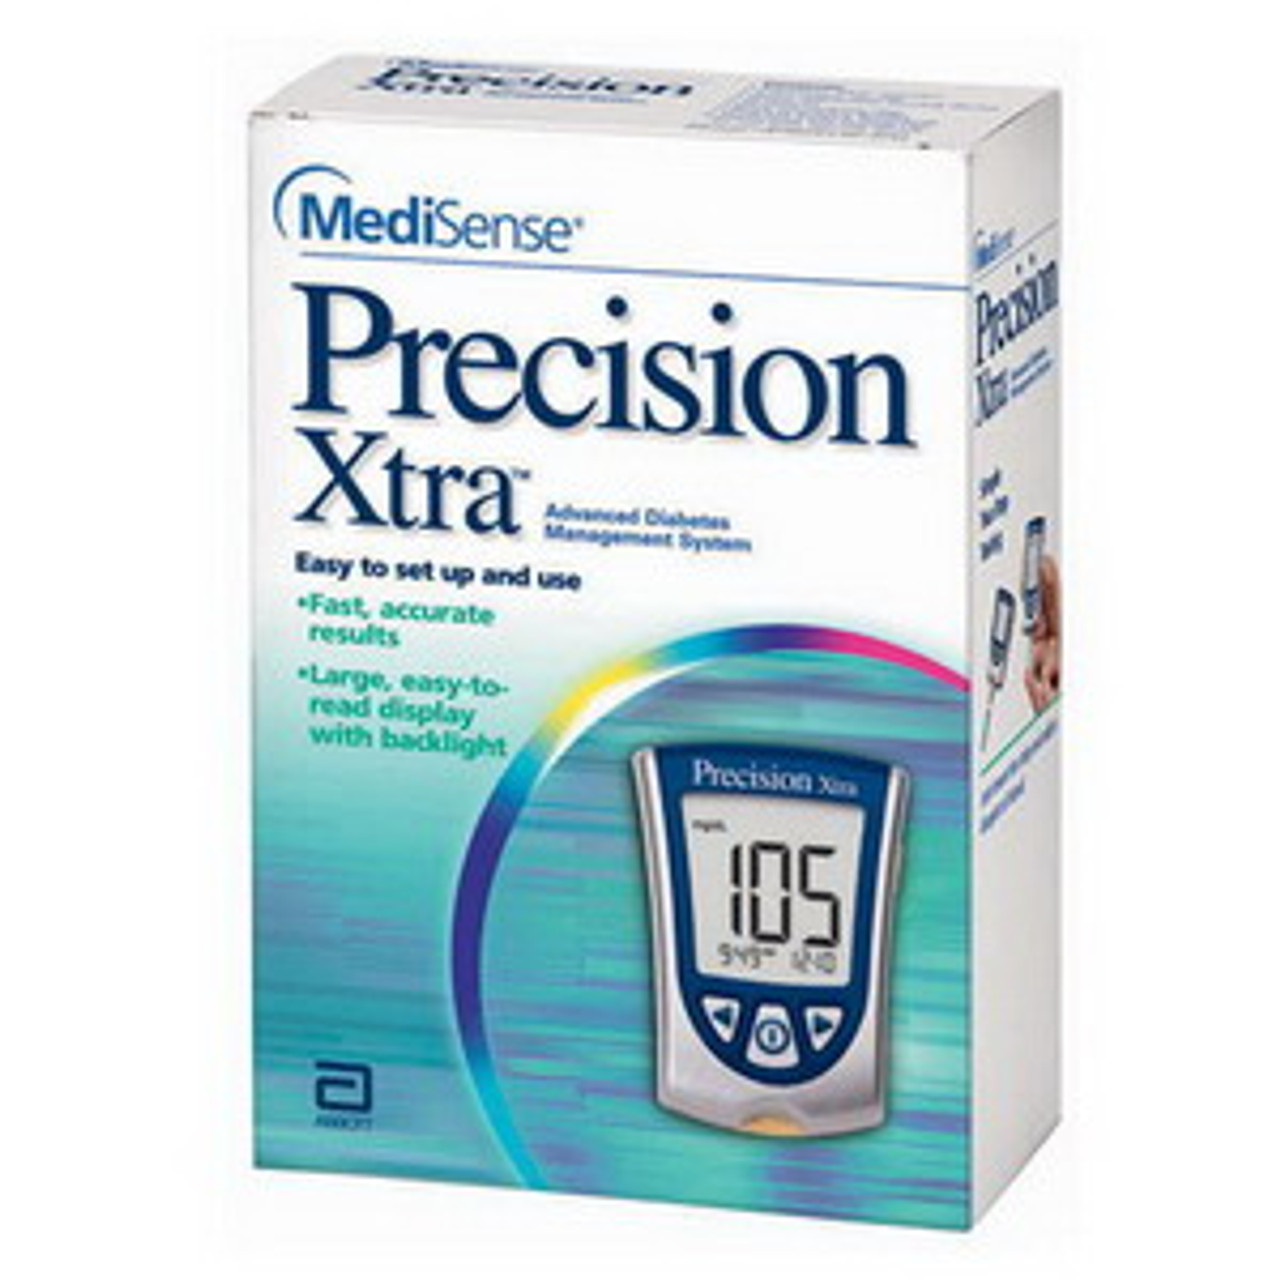 Precision Xtra Blood Glucose / Ketone Monitoring System